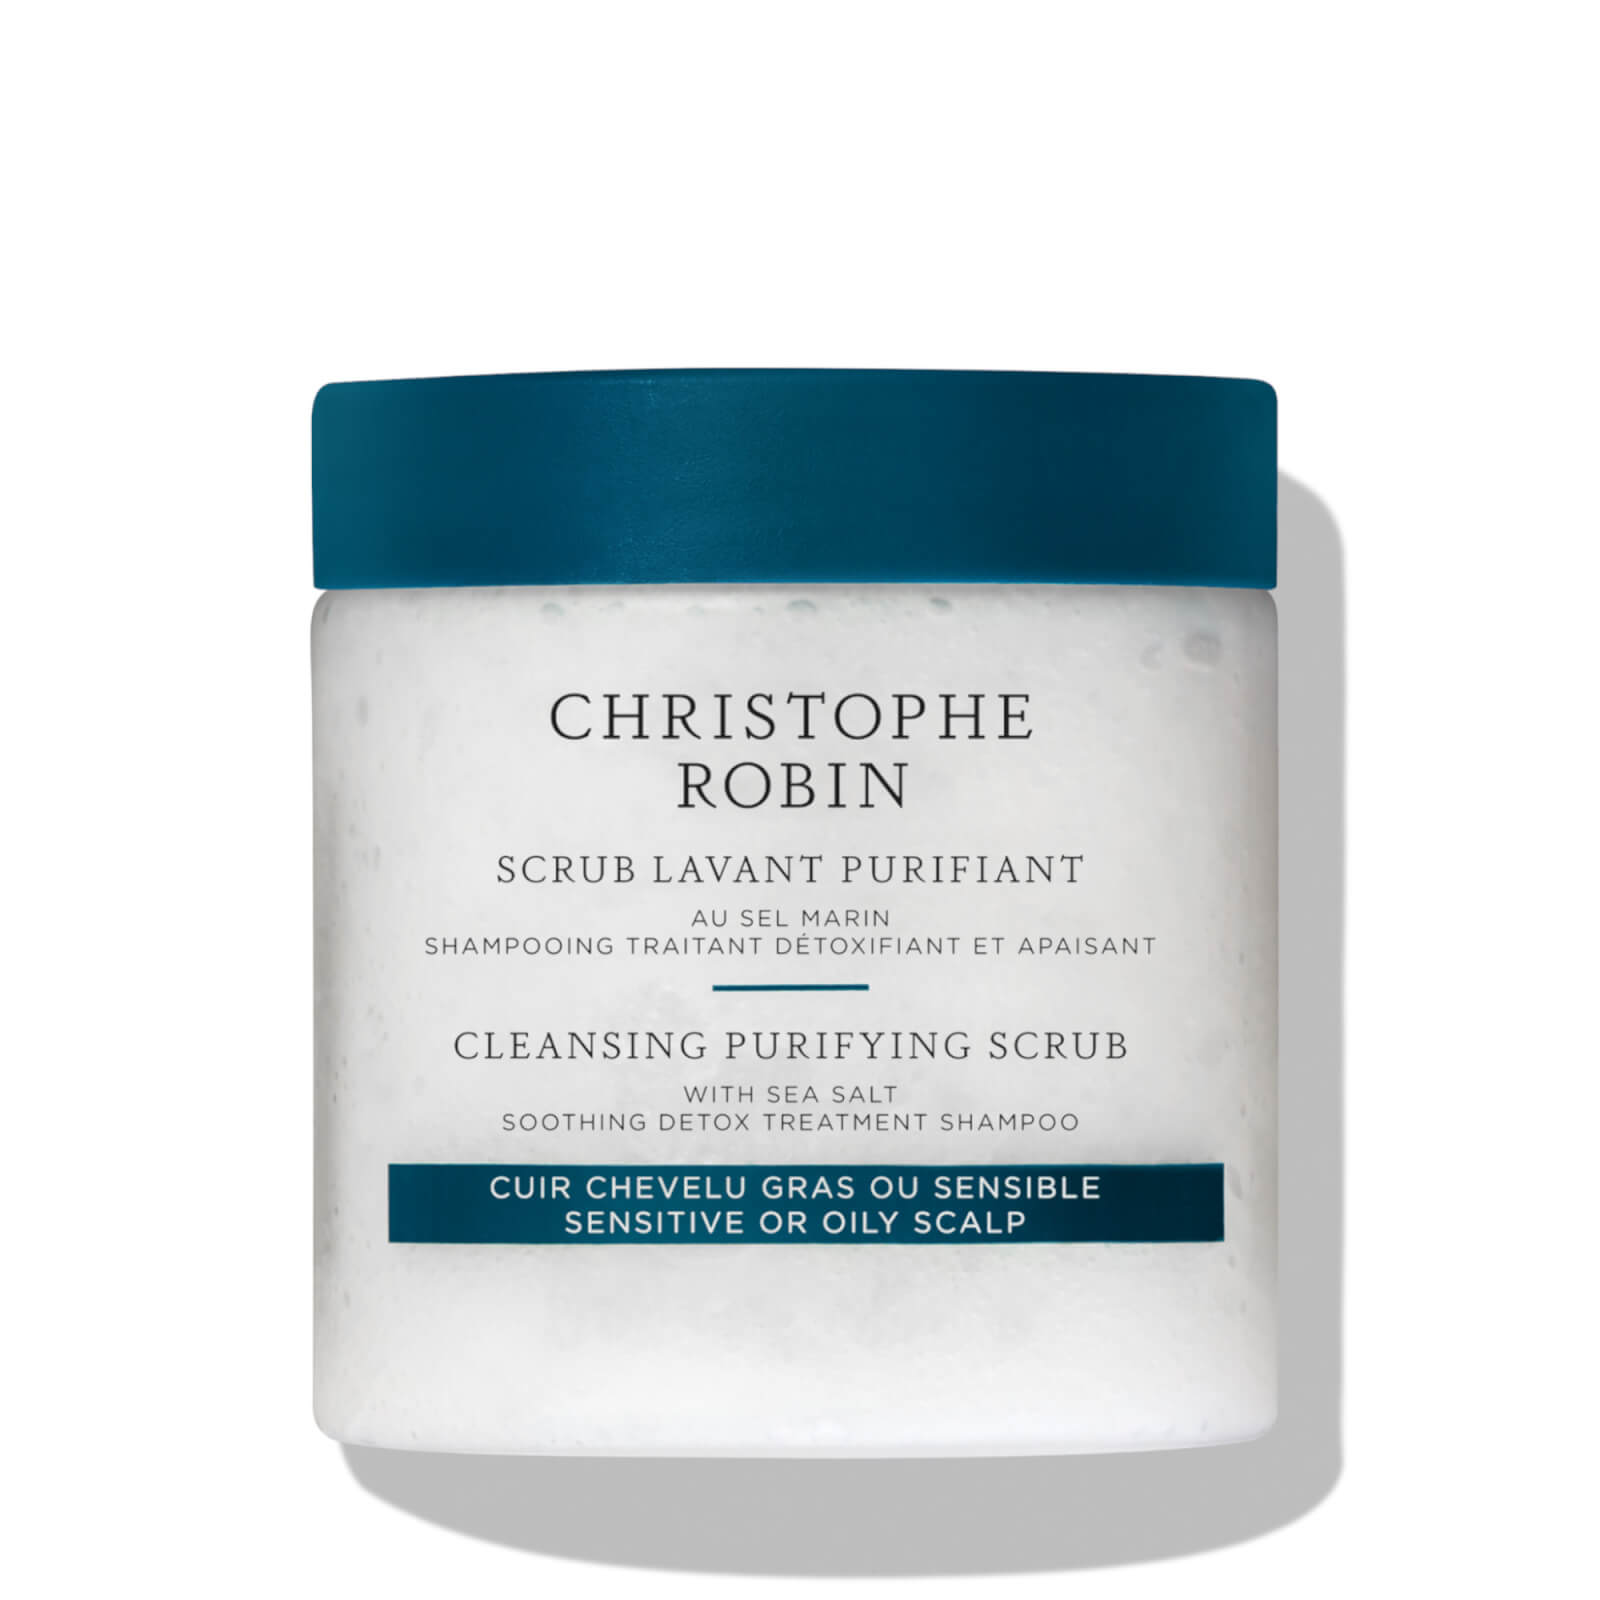 Christophe Robin Purifying Scrub 75ml - New In White